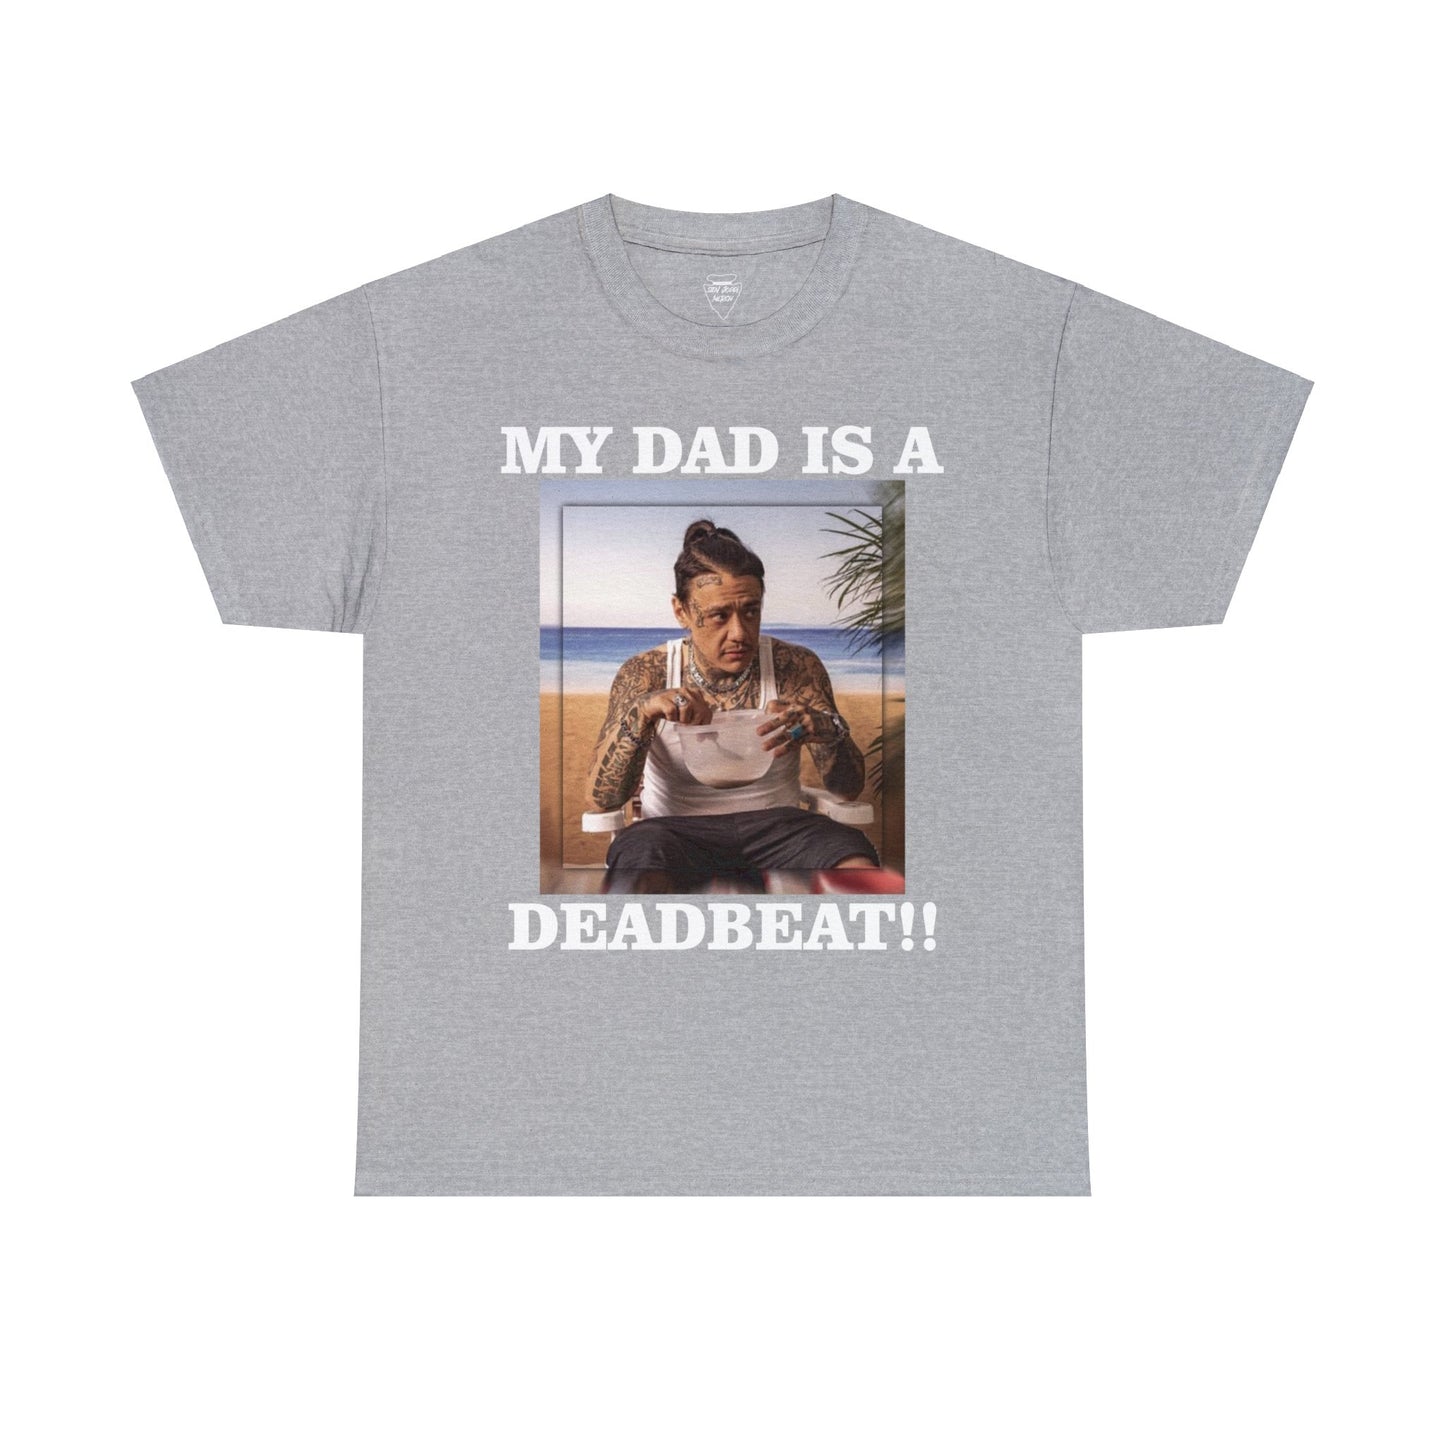 Deadbeat Dad